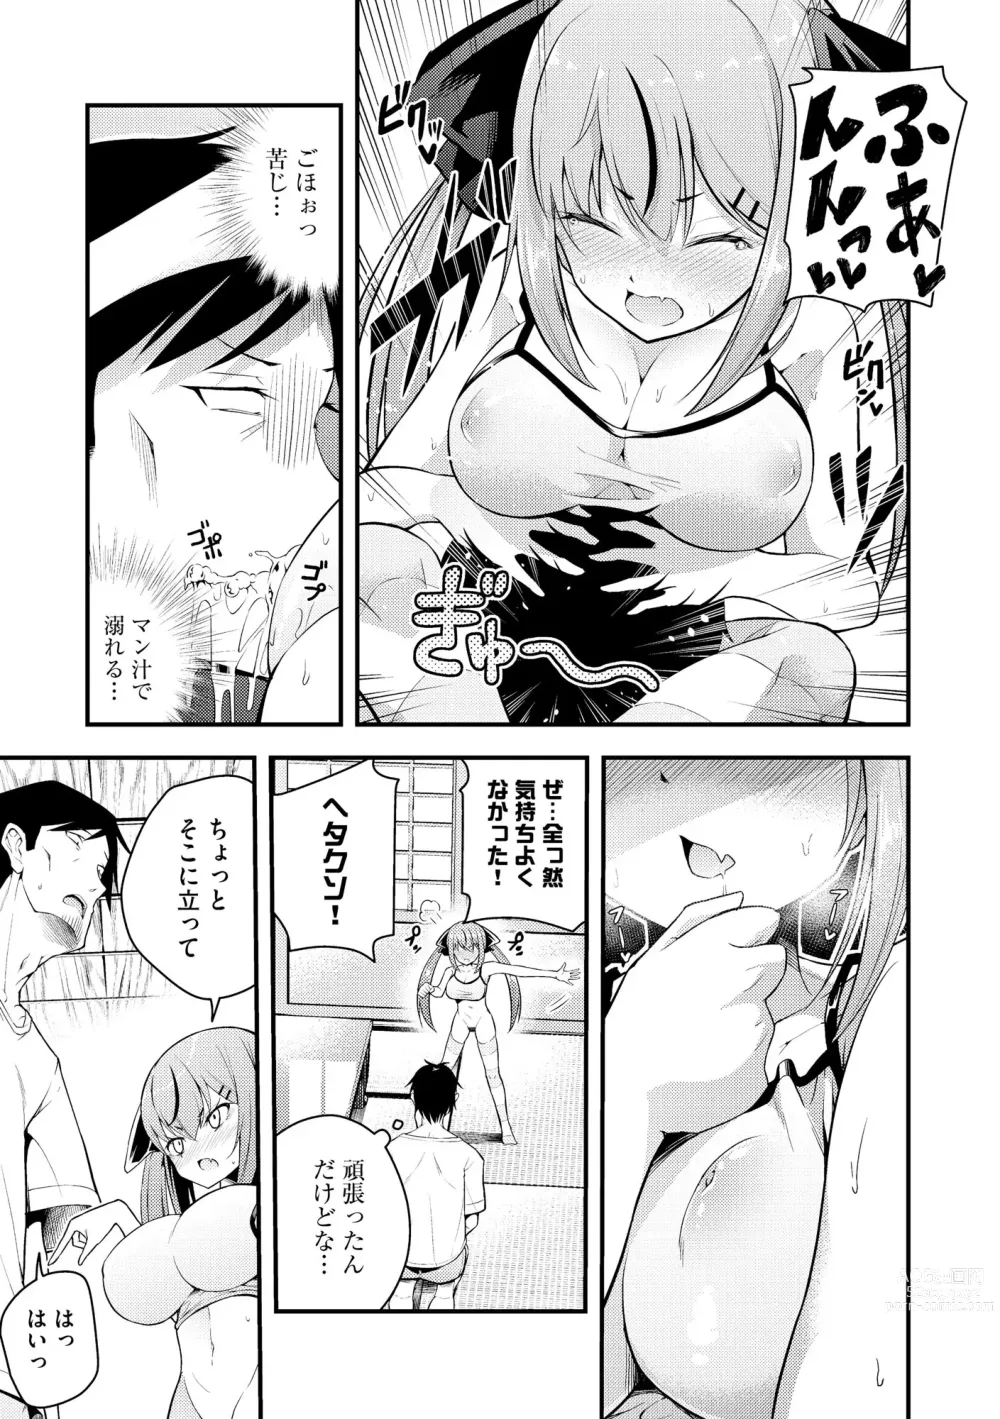 Page 21 of manga Cyberia Plus Vol. 16